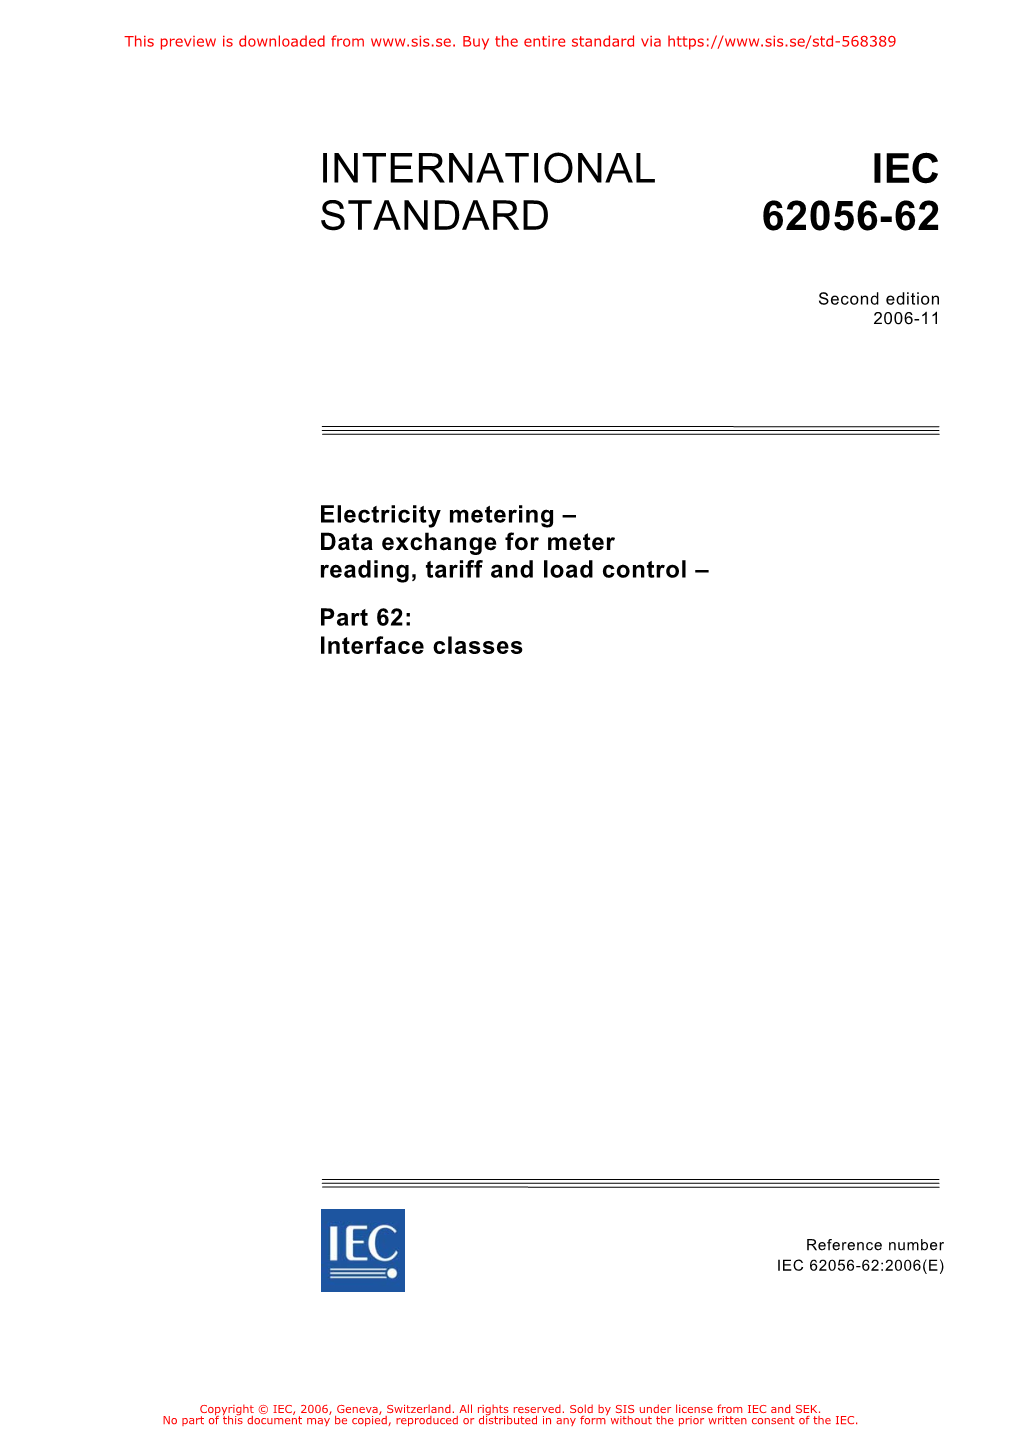 International Standard IEC 62056-62 Ed